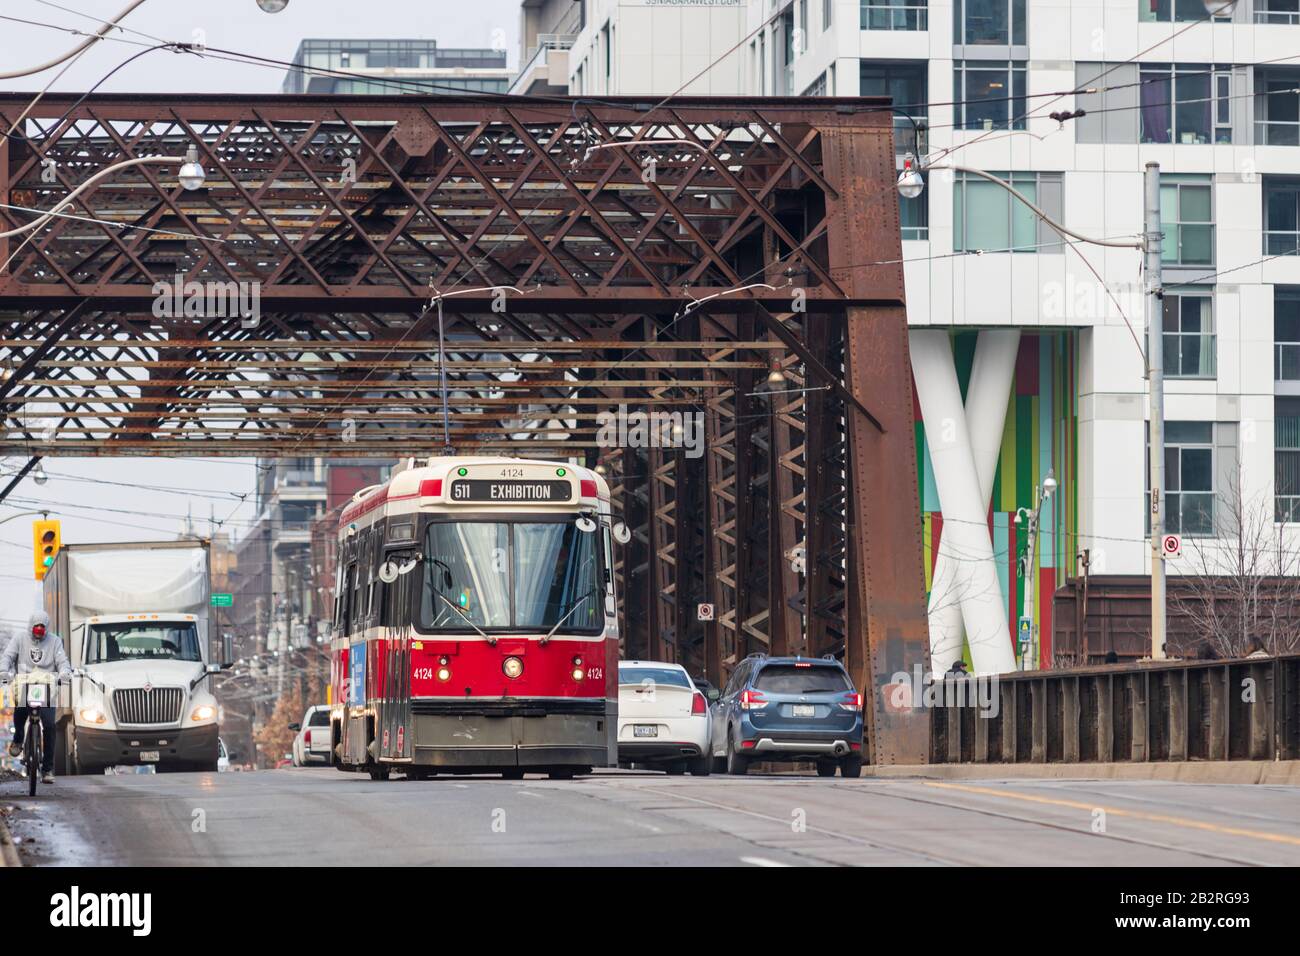 TTC (Toronto Transit Commission) el tranvía CLRV cruza el famoso puente Bathurst en el centro de Toronto. Foto de stock